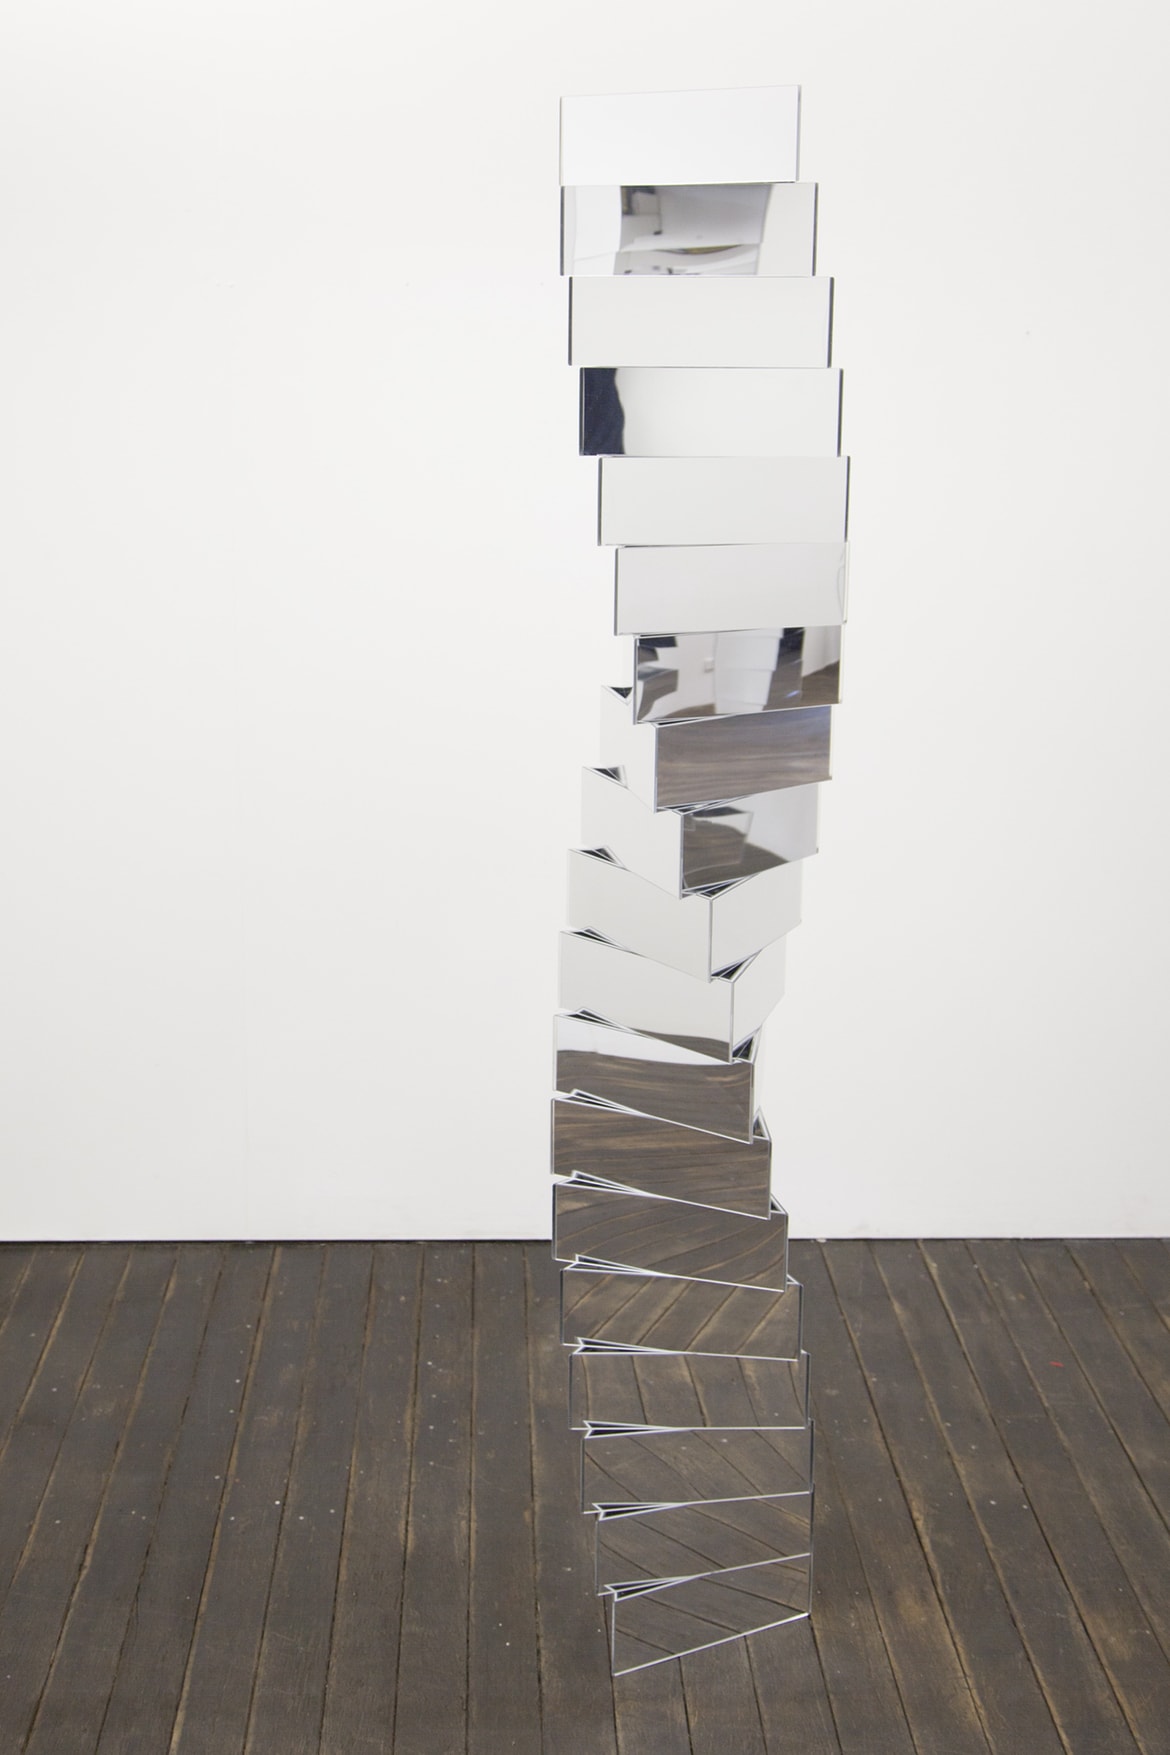 'Social Construct', 2018, acrylic mirror, approx. 190 x 30 cm